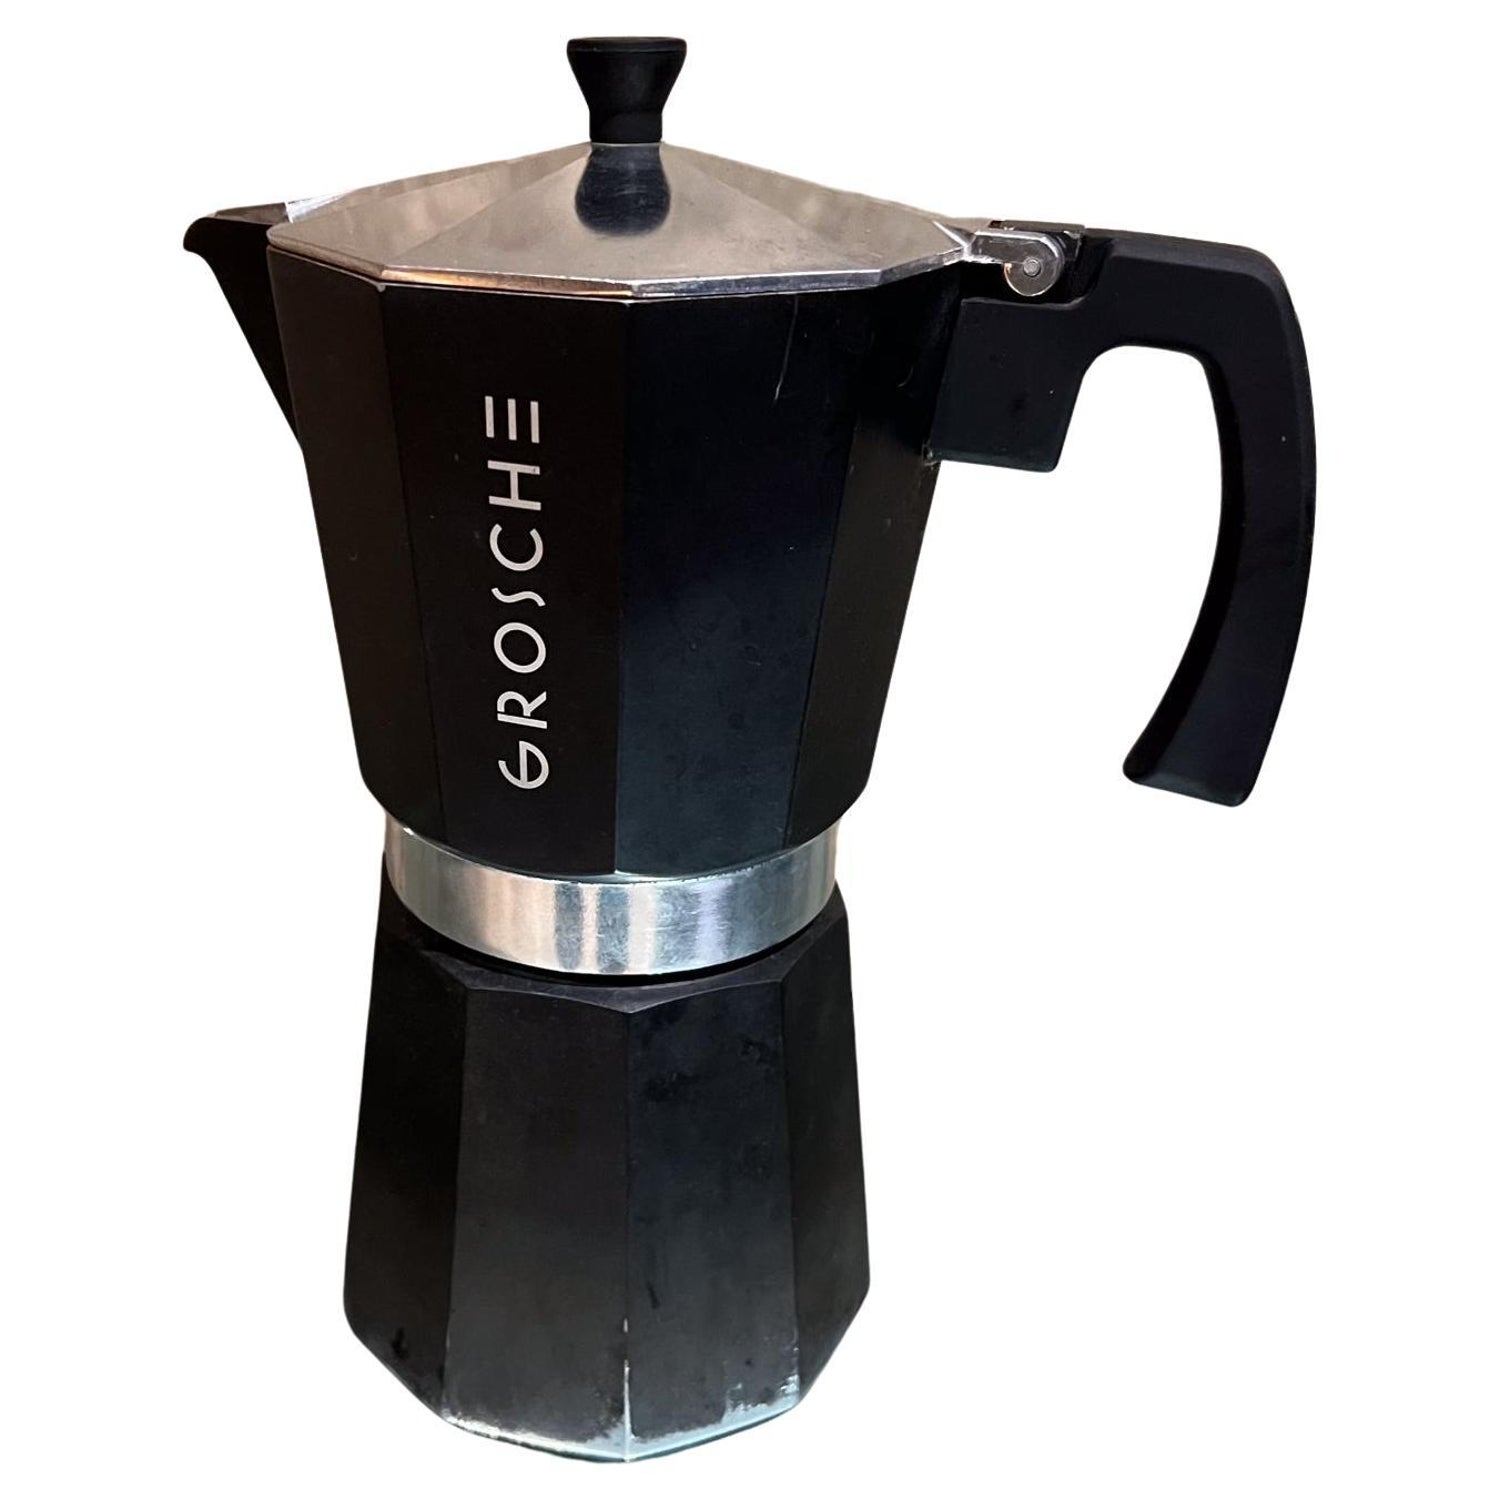 https://a.1stdibscdn.com/vintage-milano-large-espresso-coffee-maker-grosche-italy-for-sale/f_9715/f_374671121702054421059/f_37467112_1702054421327_bg_processed.jpg?width=1500